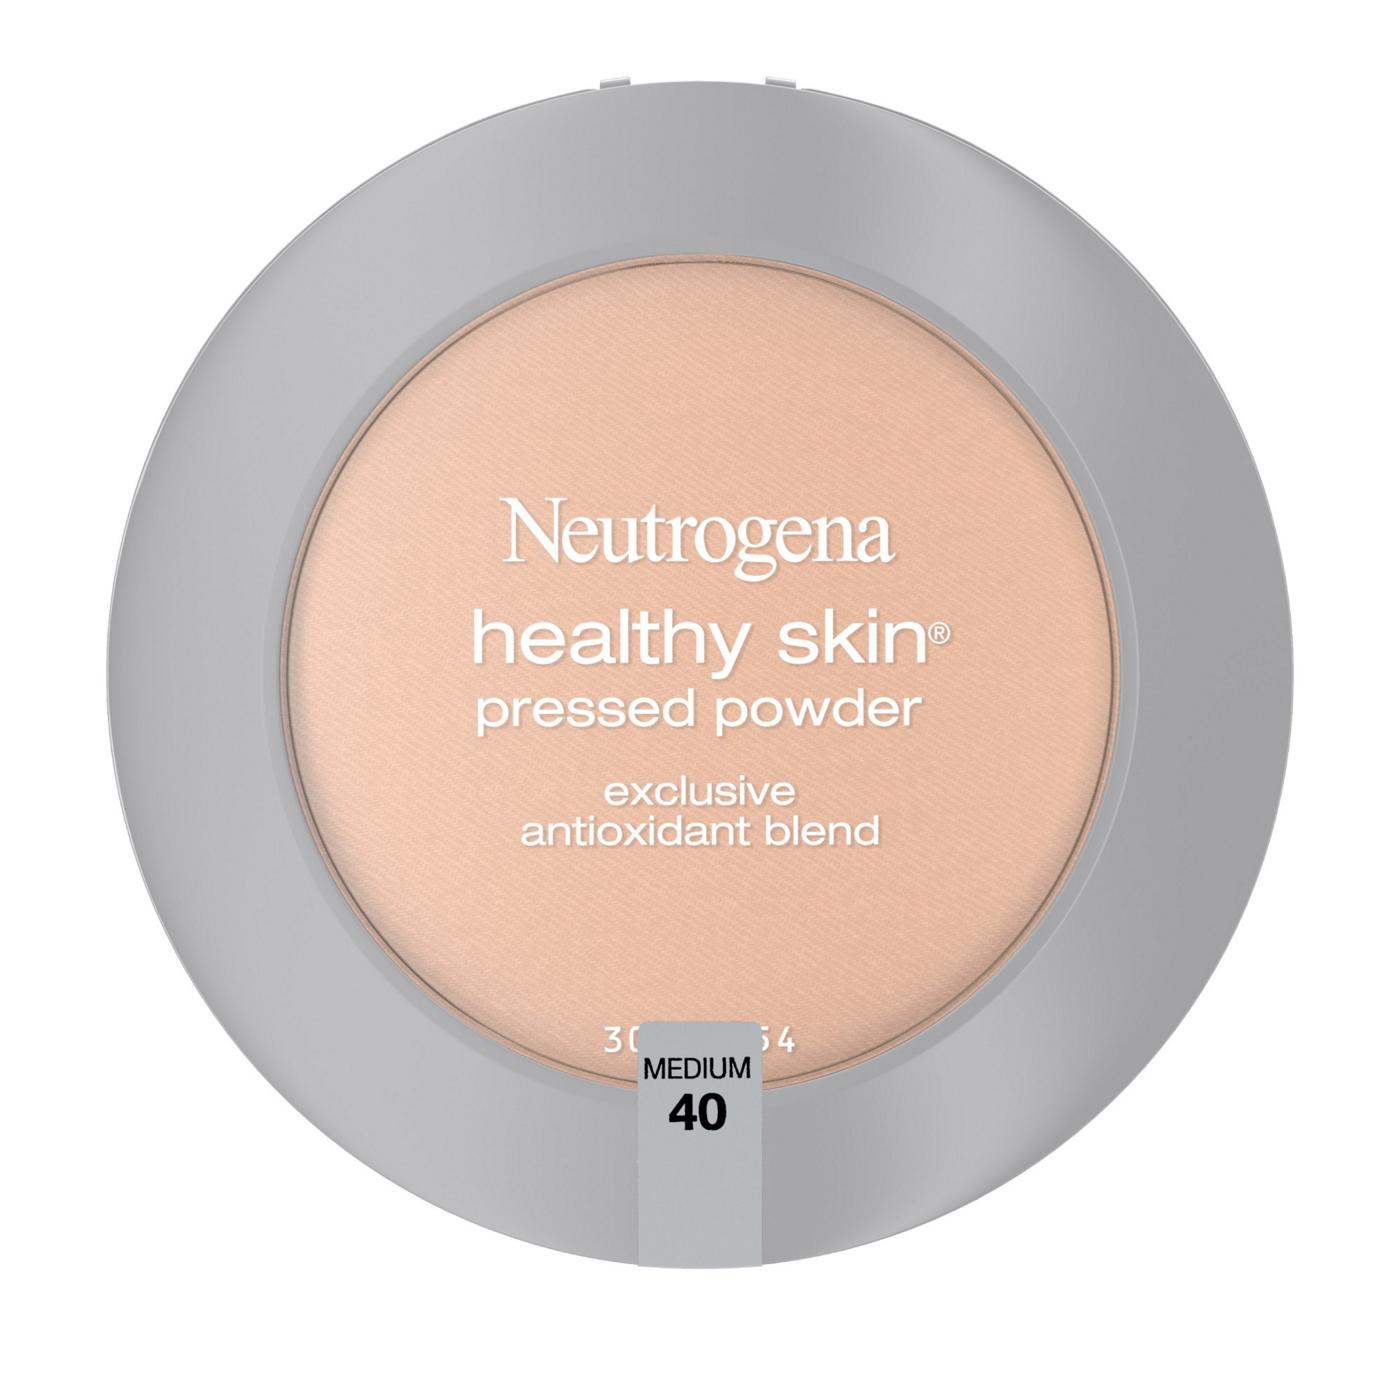 Neutrogena Healthy Skin Pressed Powder 40 Medium; image 1 of 5